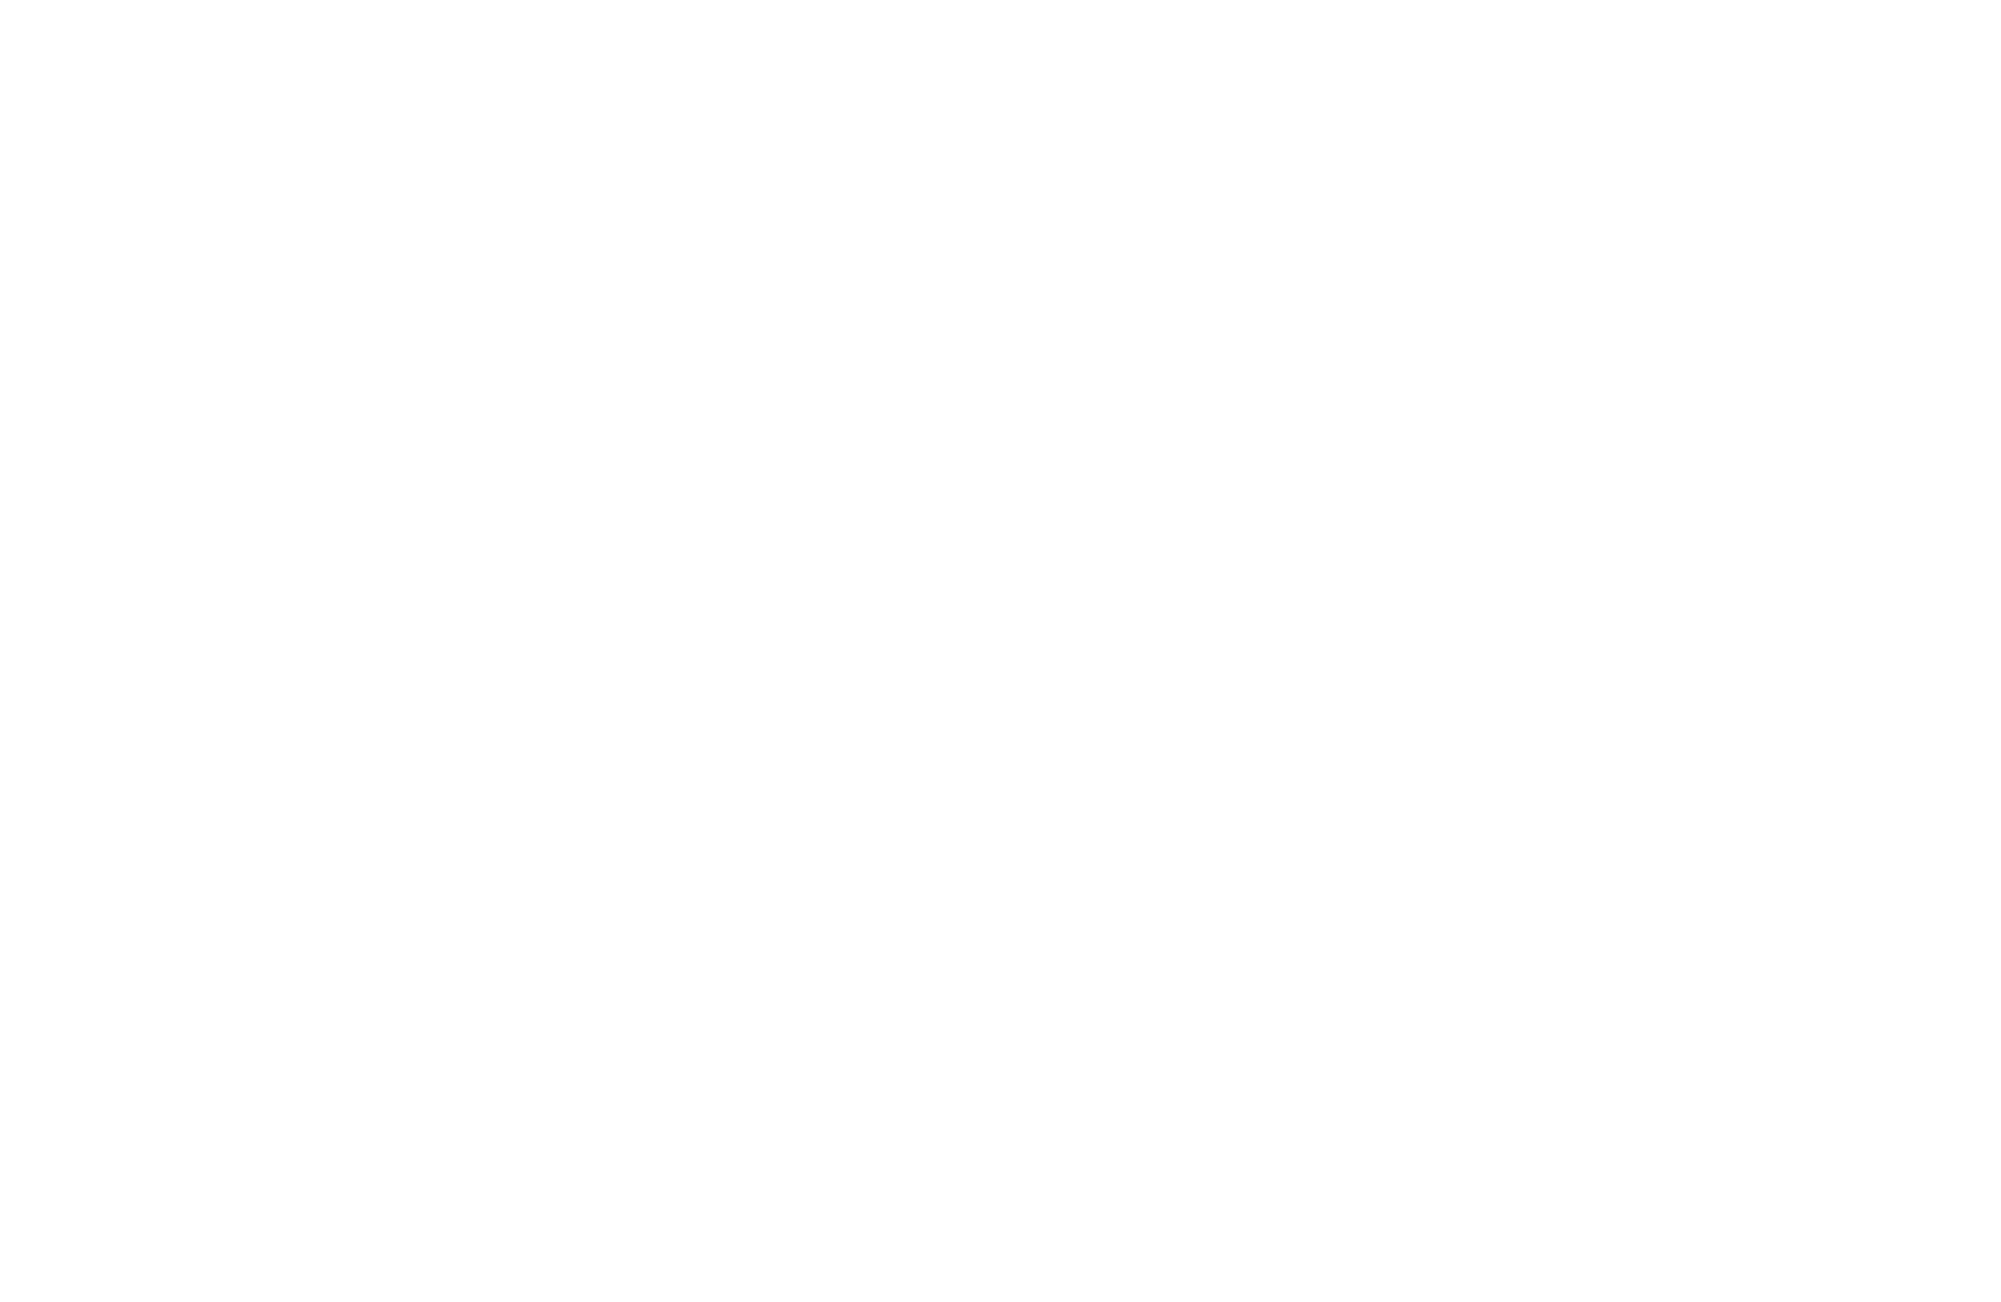 Brian Raymond’s Drag Radial ’69 Camaro typography